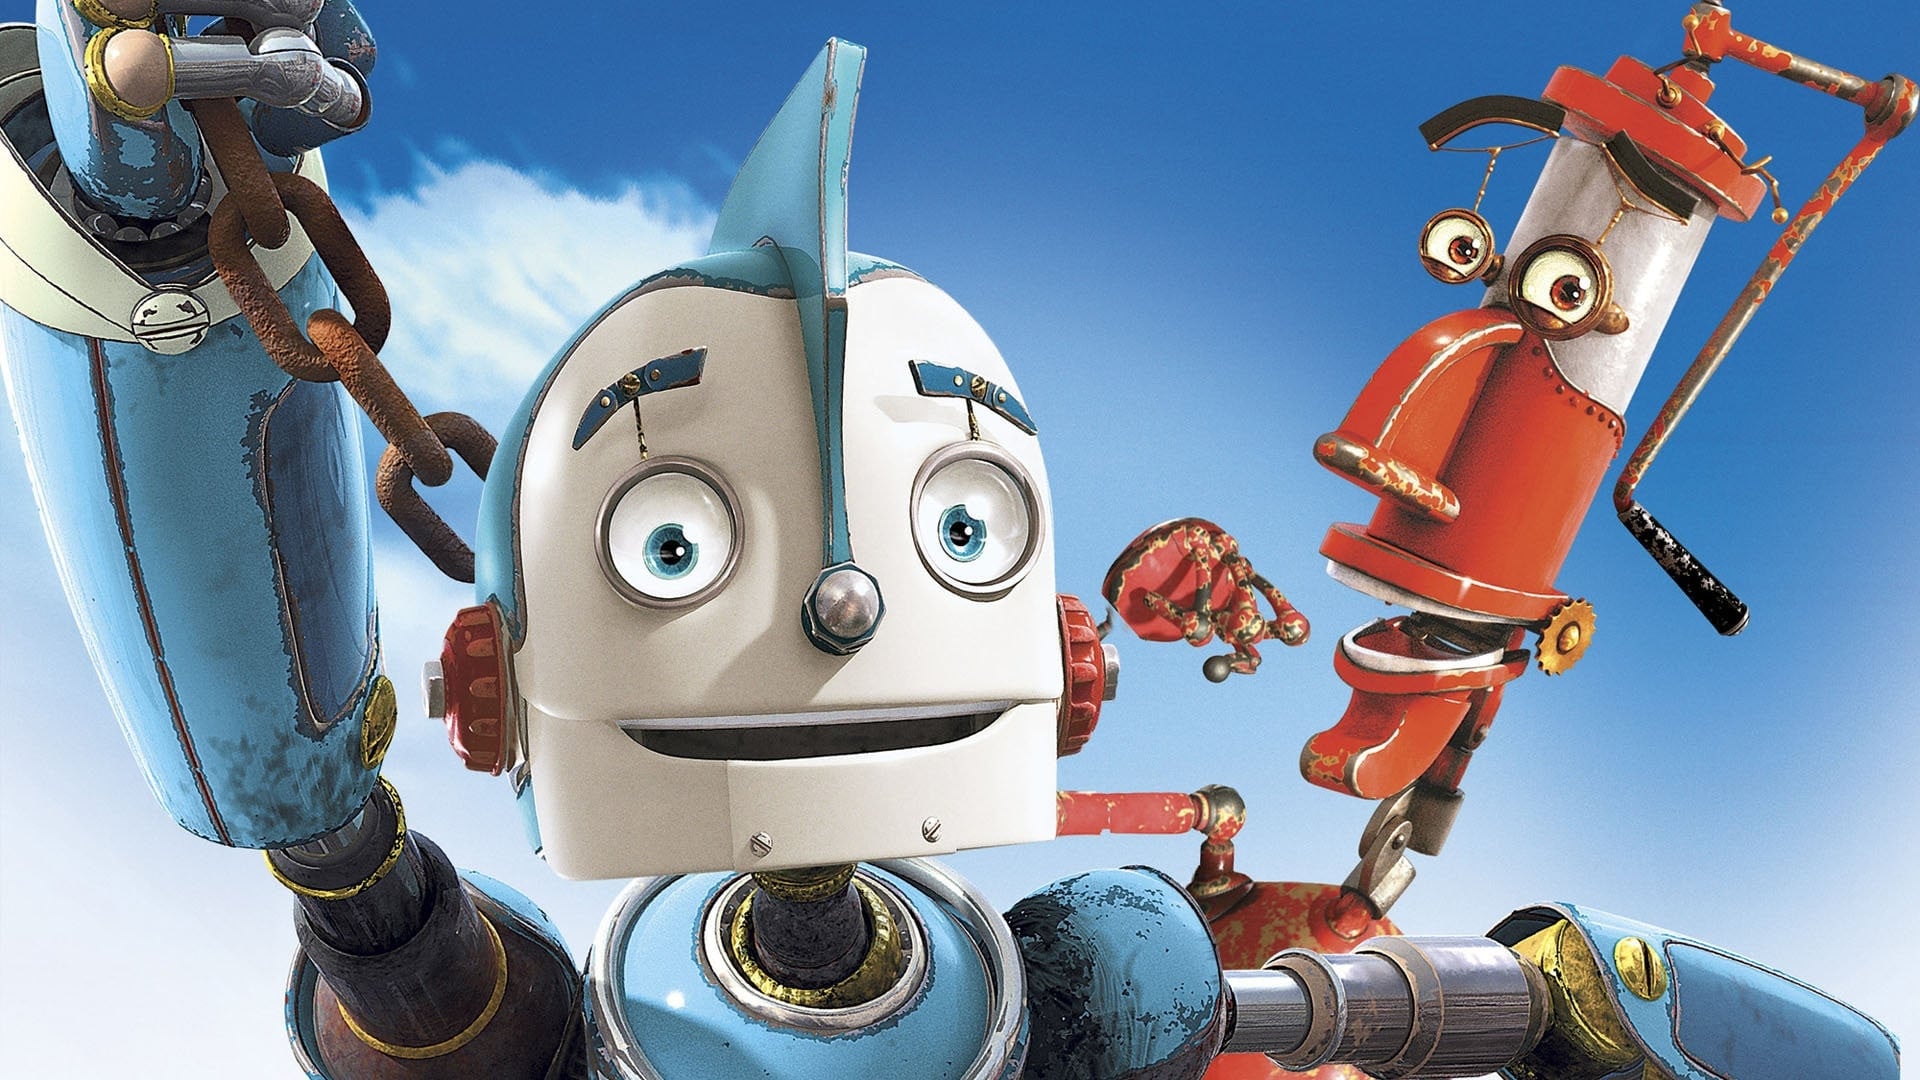 Descargar Robots (2005) Pelicula completa En Latino Por Torrent HD - Buscando Al Robot Pelicula Completa En Español Latino